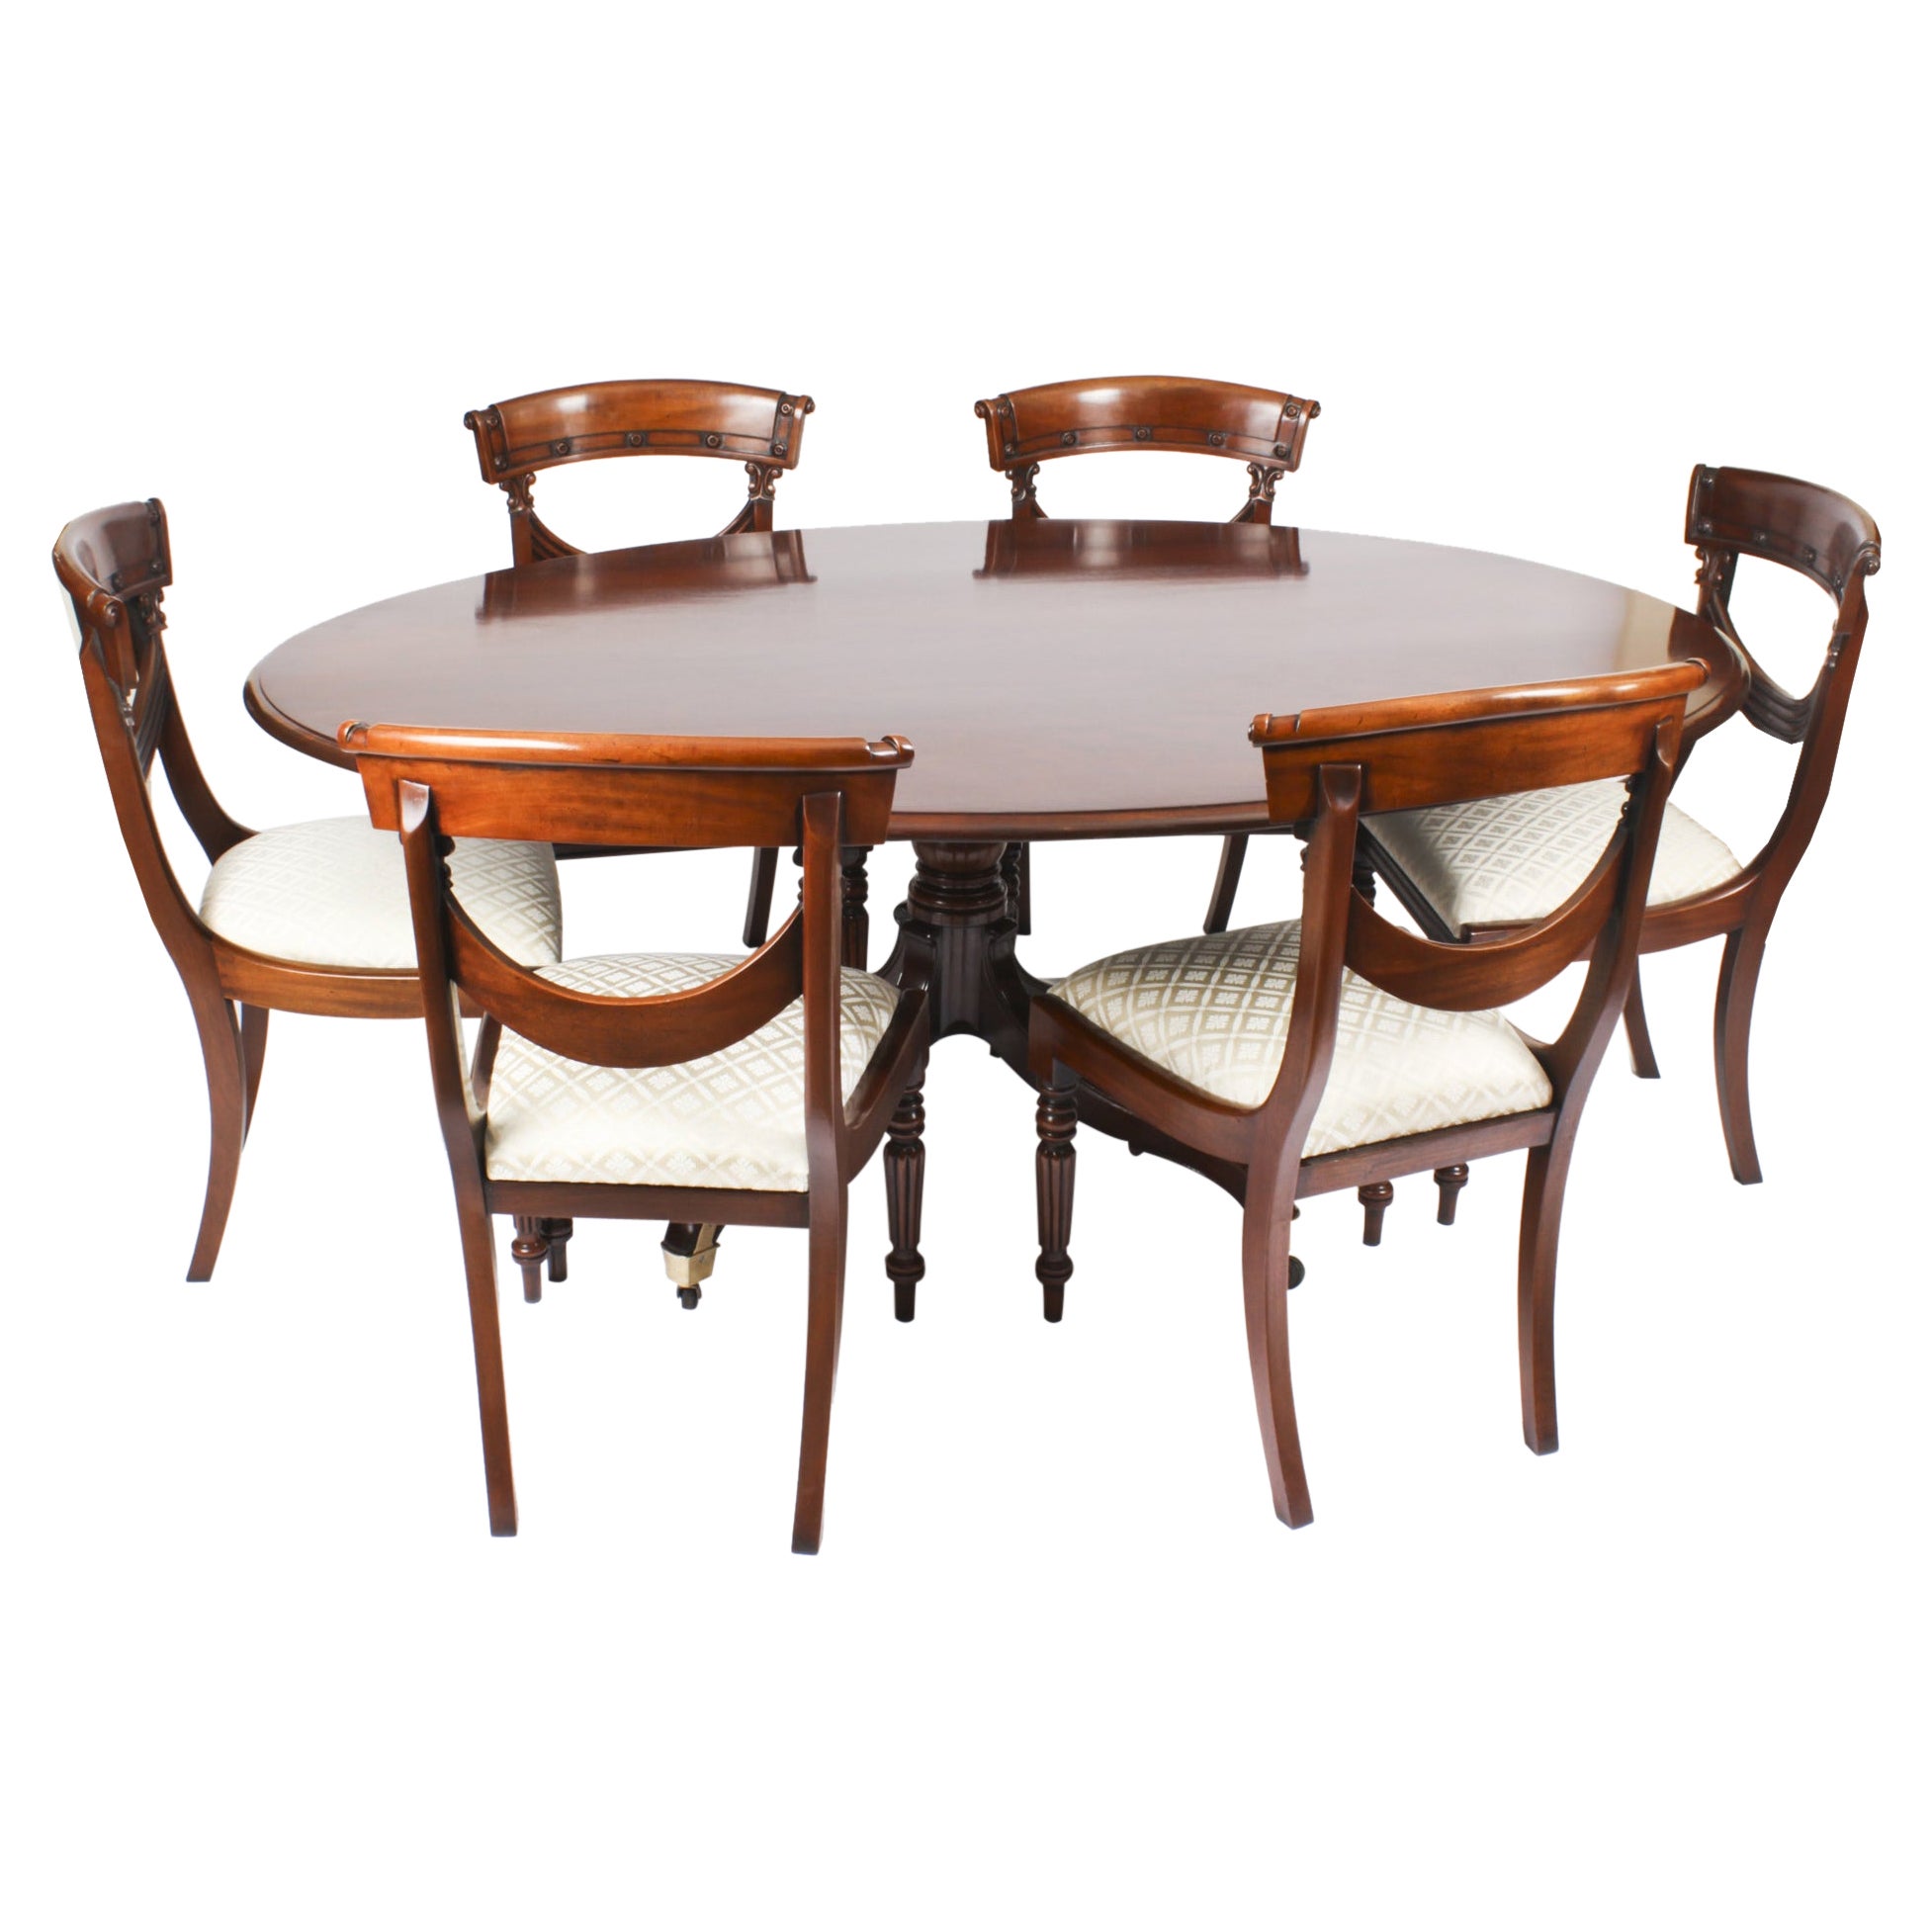 Antique Irish Georgian Oval Table & 6 Chairs 19th Century